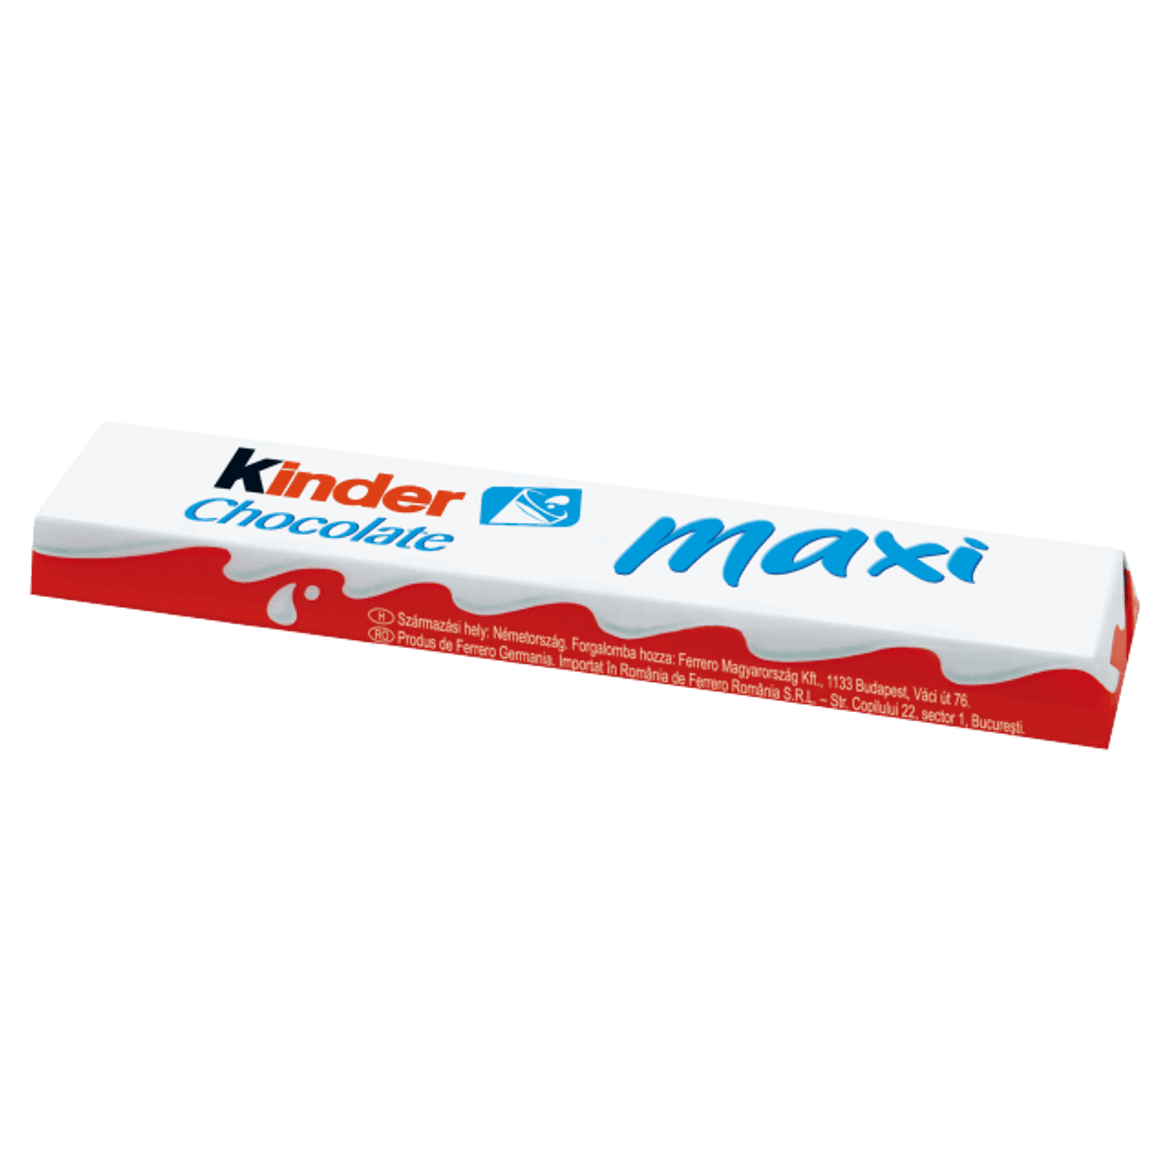 Kinder Chocolate Maxi tejcsokolÃ¡dÃ© szelet tejes krÃ©mmel tÃ¶ltve